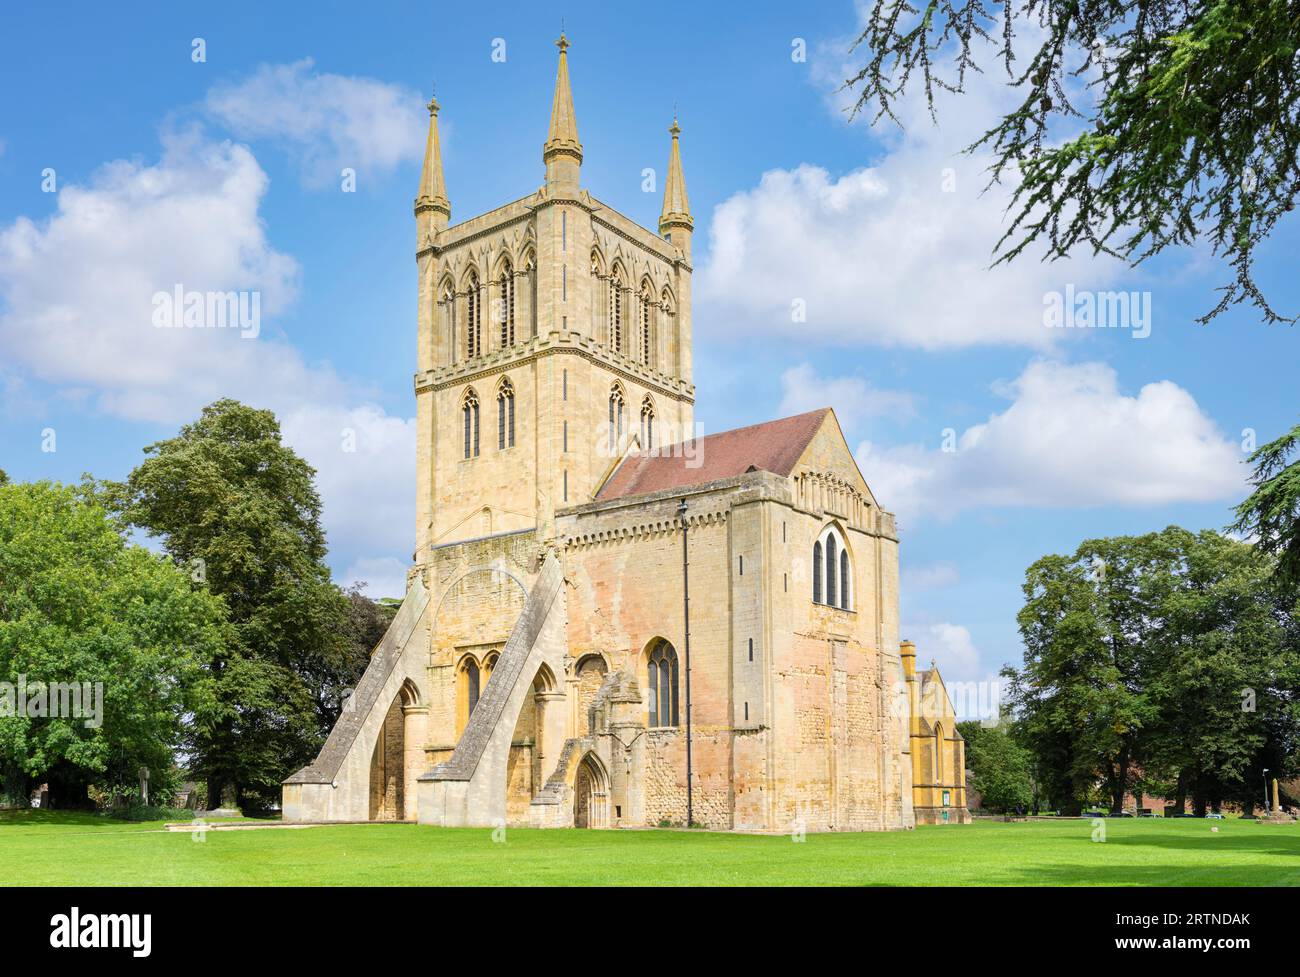 Pershore Abbey Church Walk Pershore Worcestershire England UK GB Europe Stock Photo